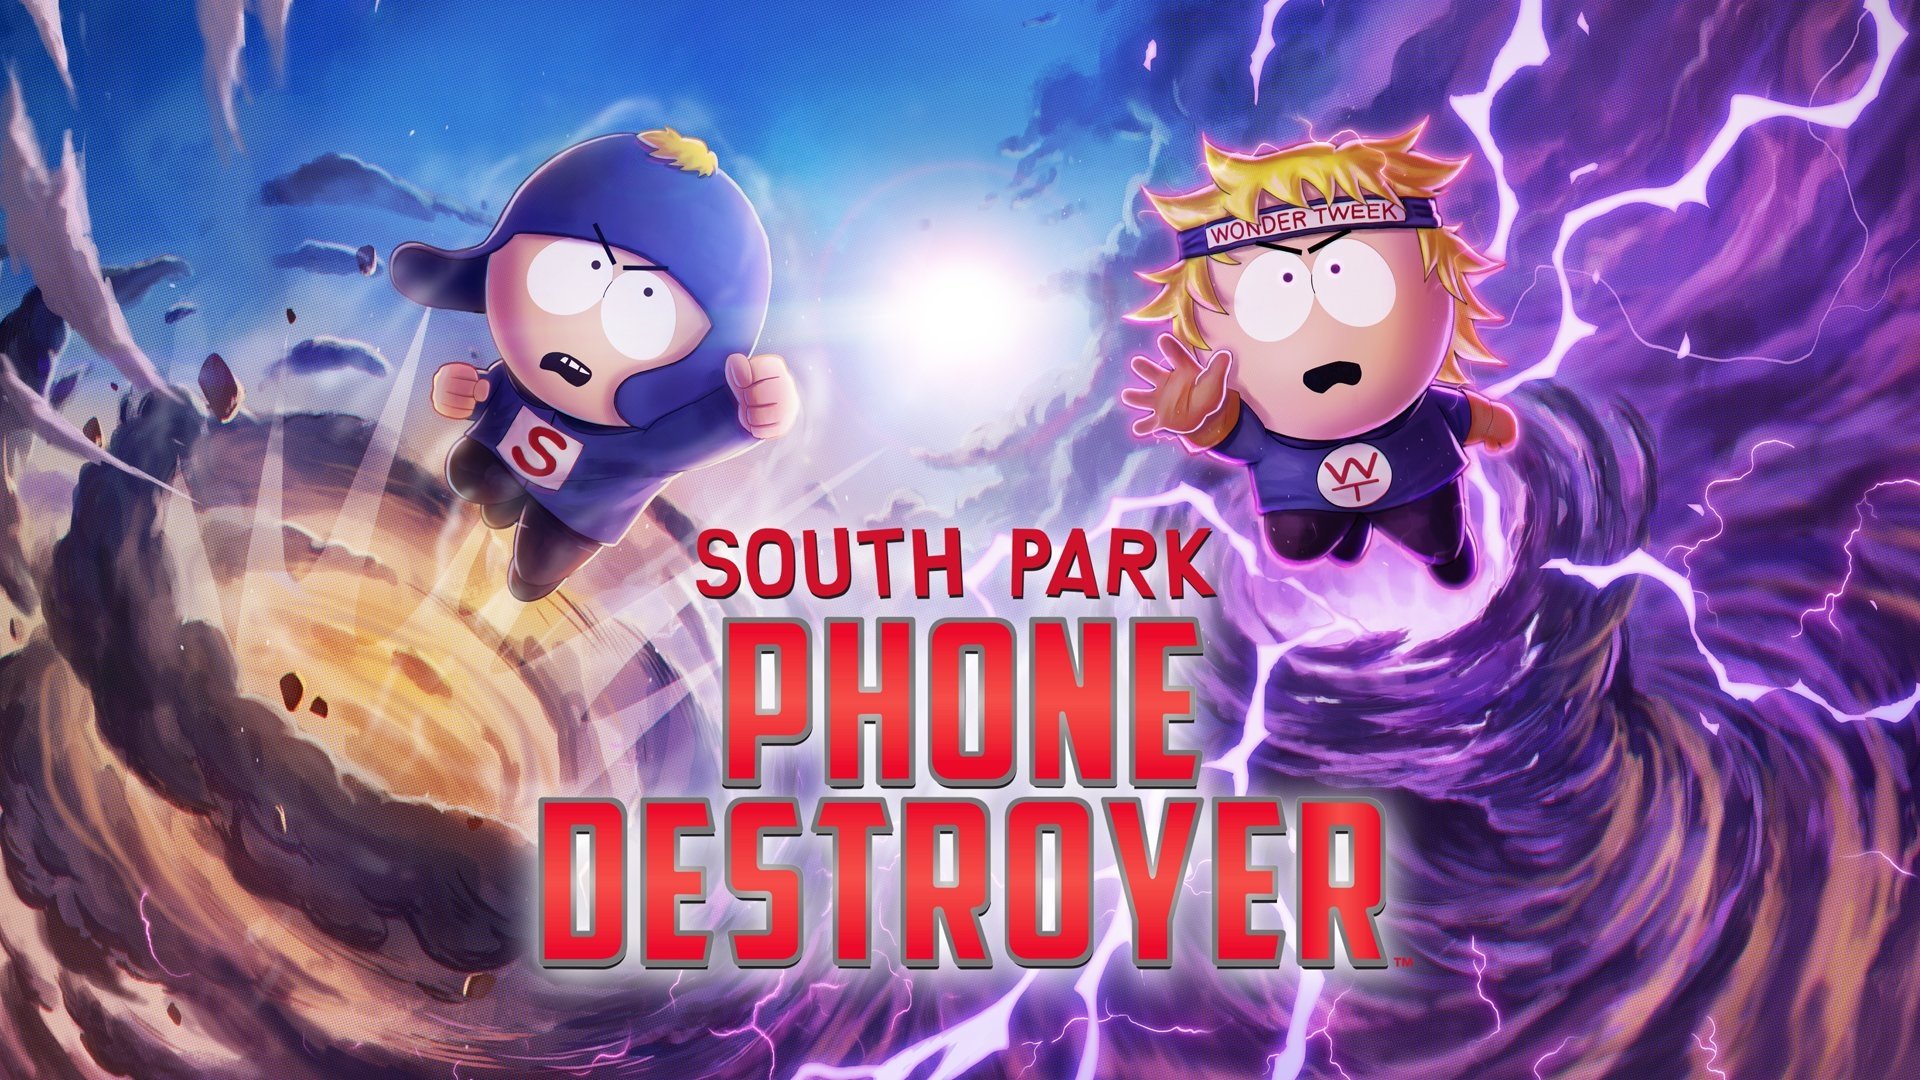 South Park Phone Destroyer HD Wallpaper